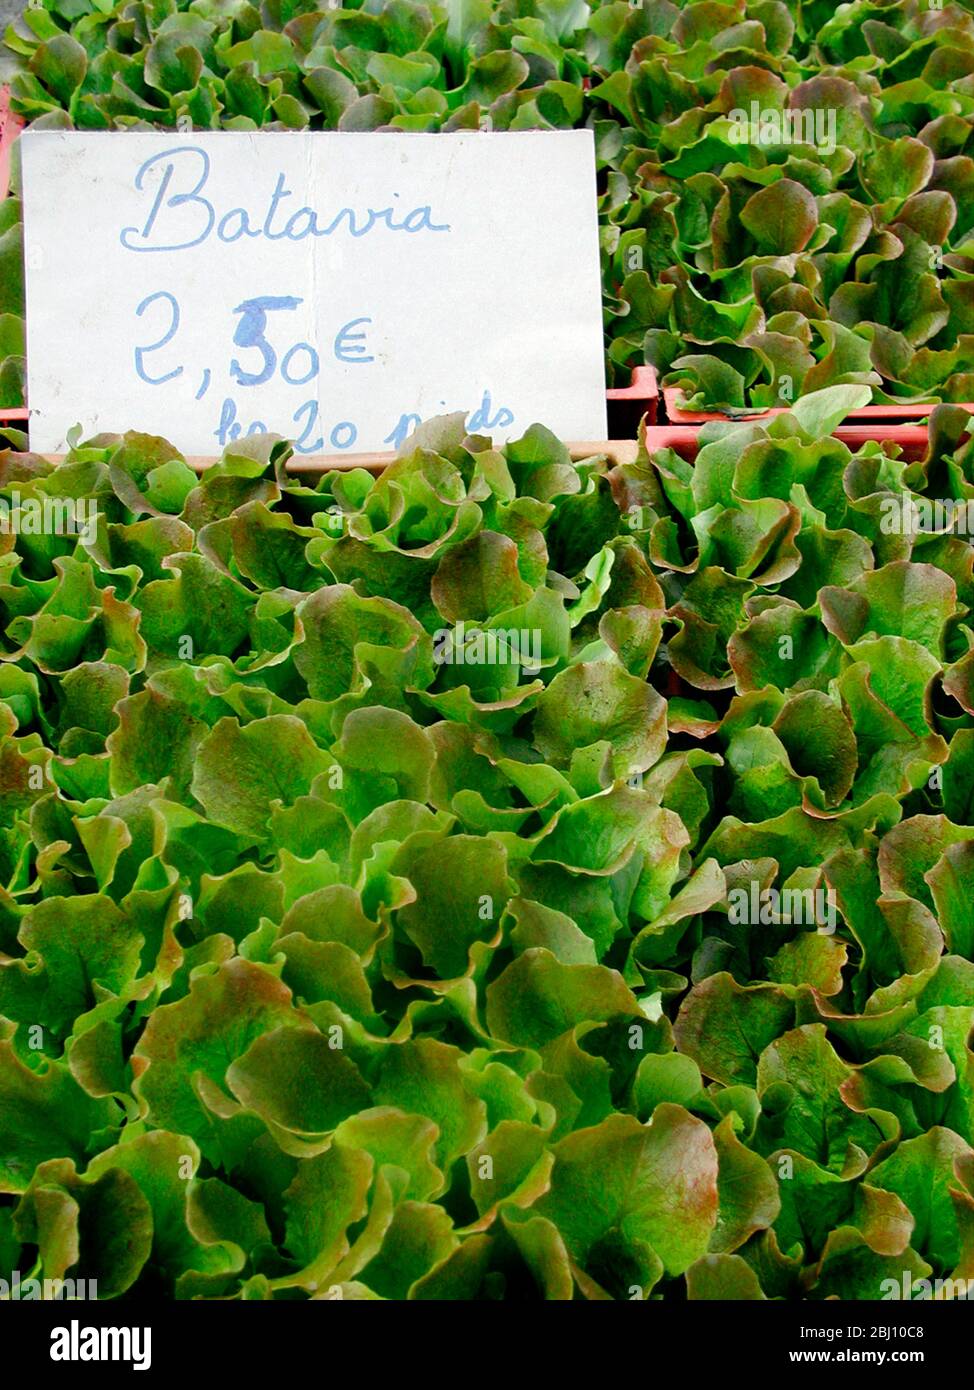 Boxes of batavia lettuce on French market stall - Stock Photo